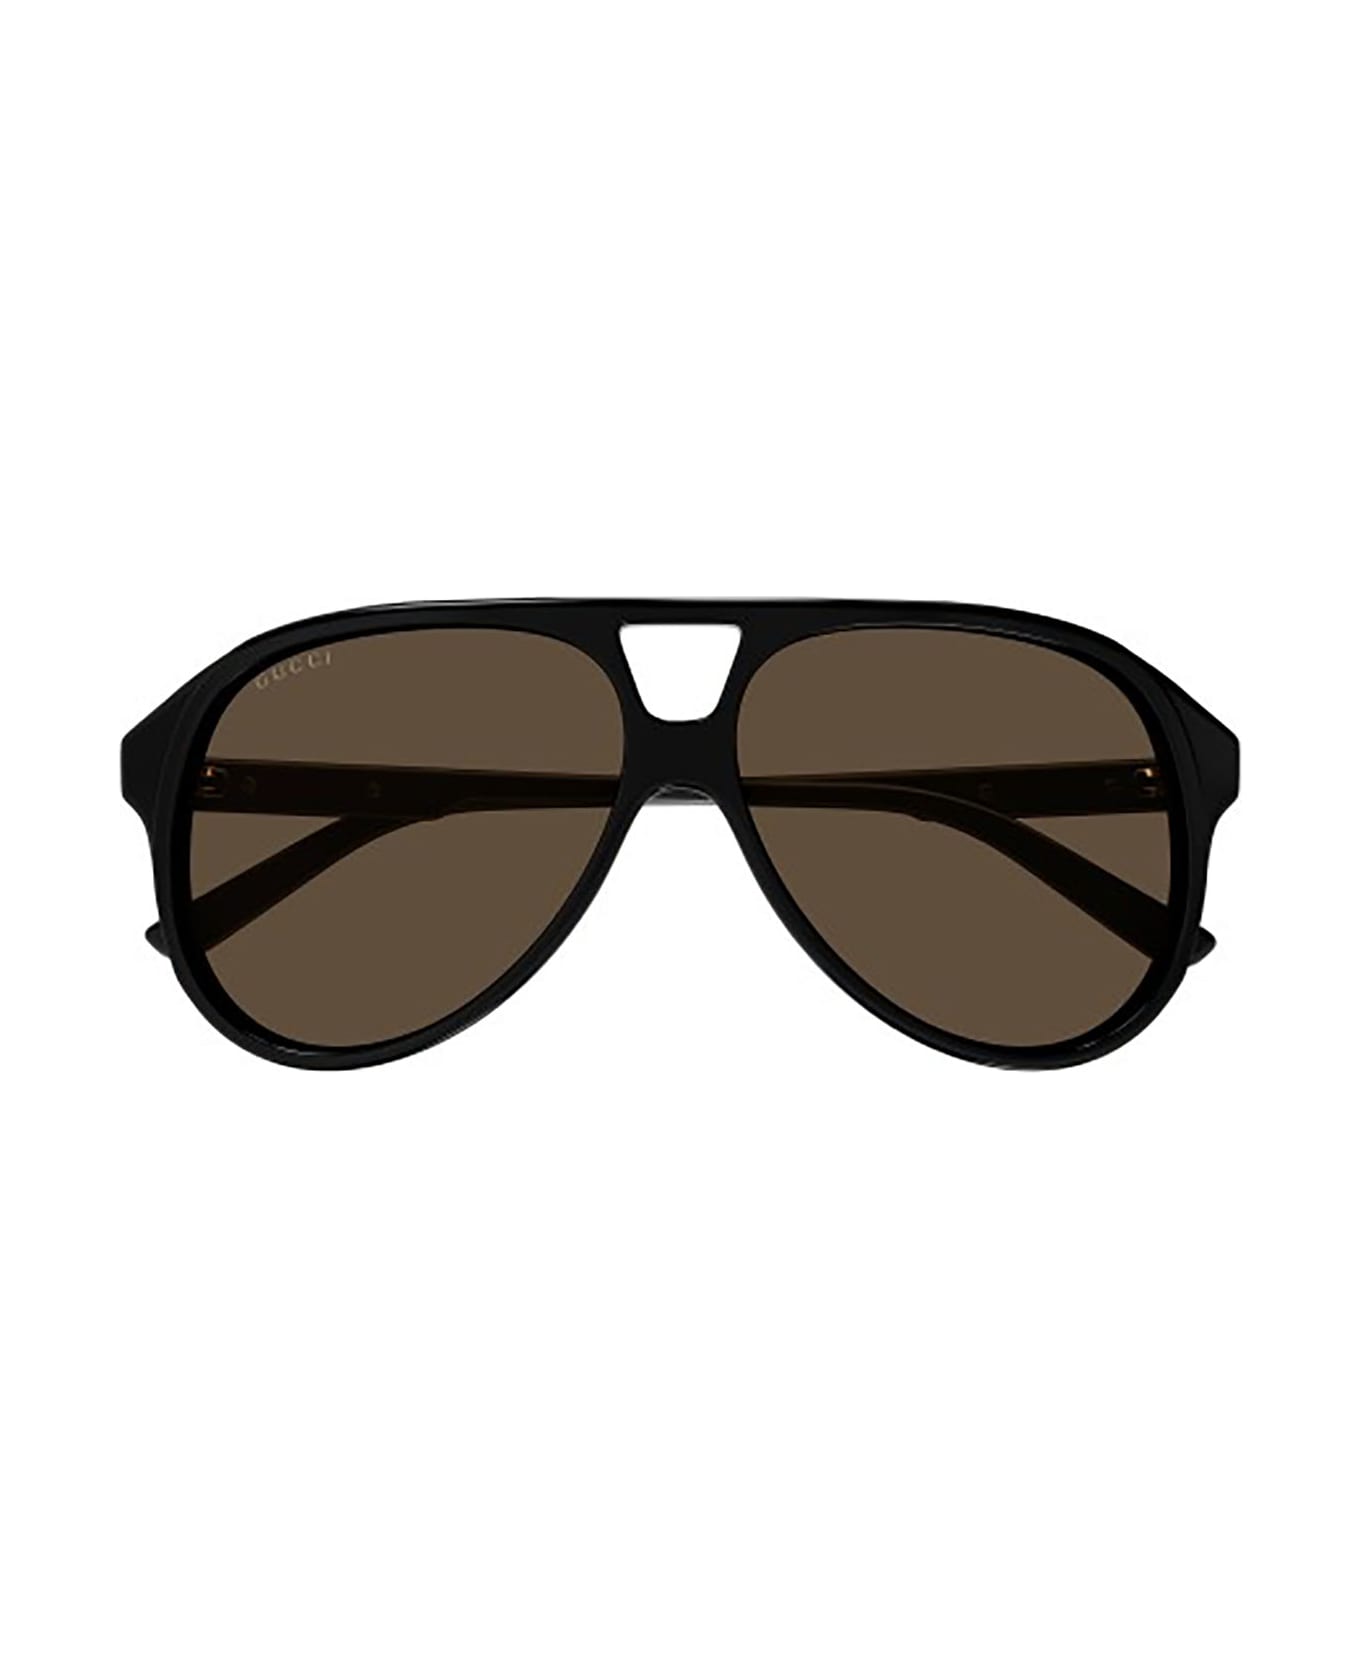 Gucci Eyewear Gg1286s Sunglasses - 001 black black brown サングラス